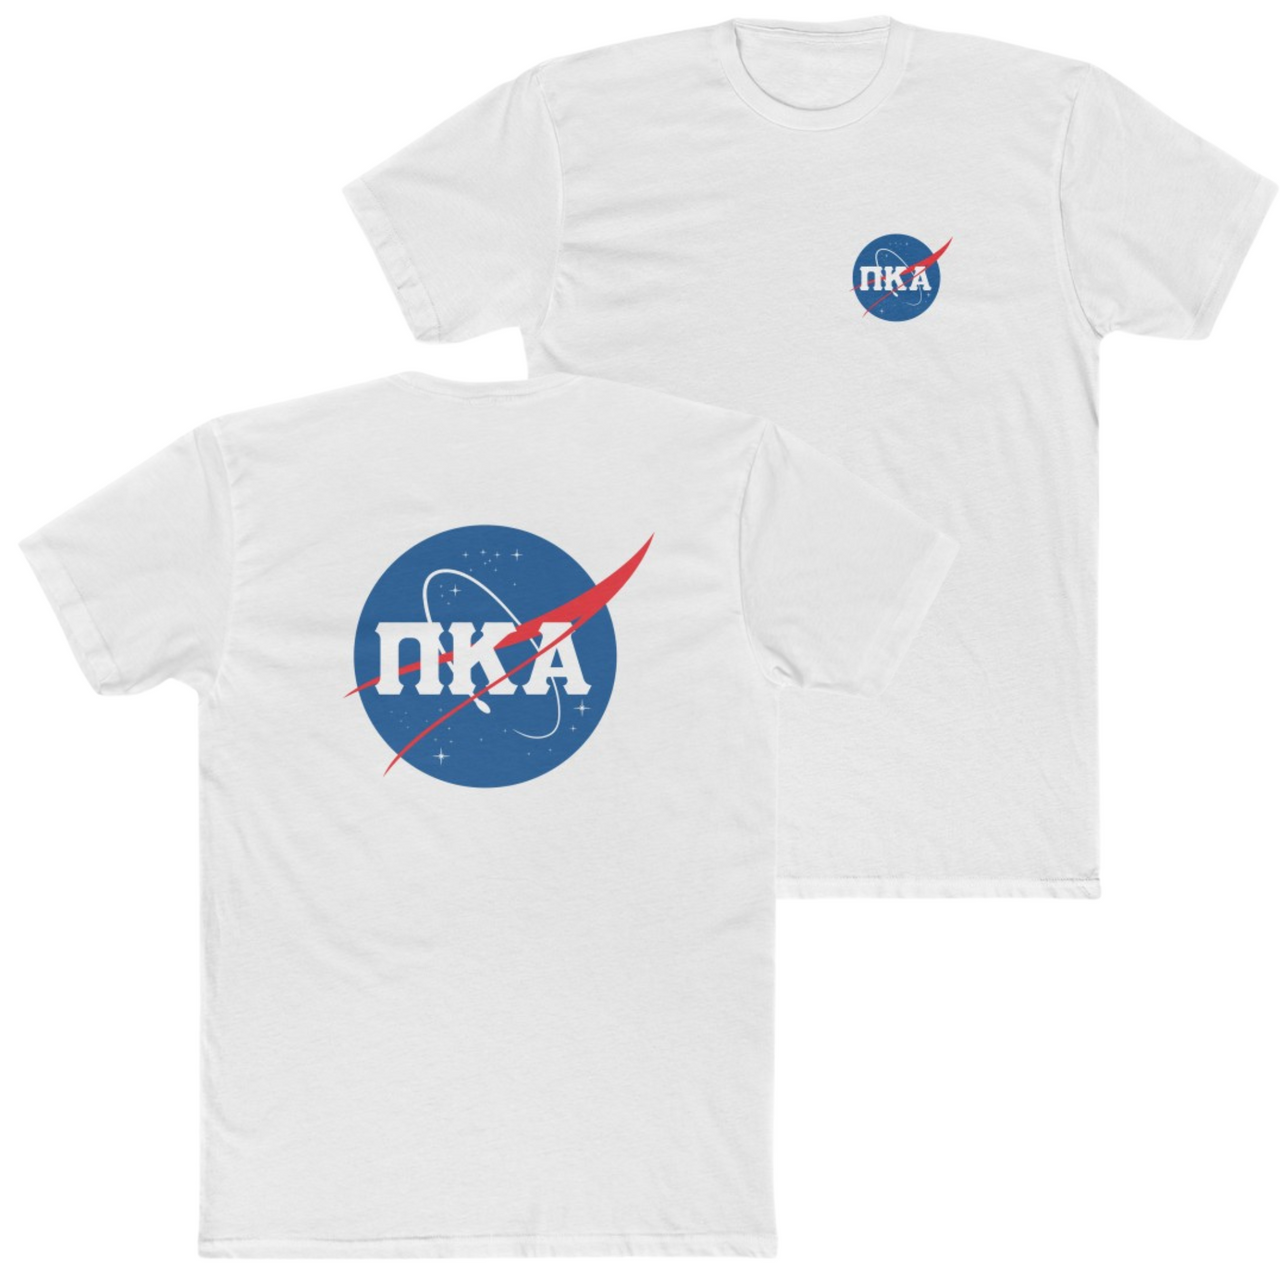 White Pi Kappa Alpha Graphic T-Shirt | Nasa 2.0 | Pi kappa alpha fraternity shirt 